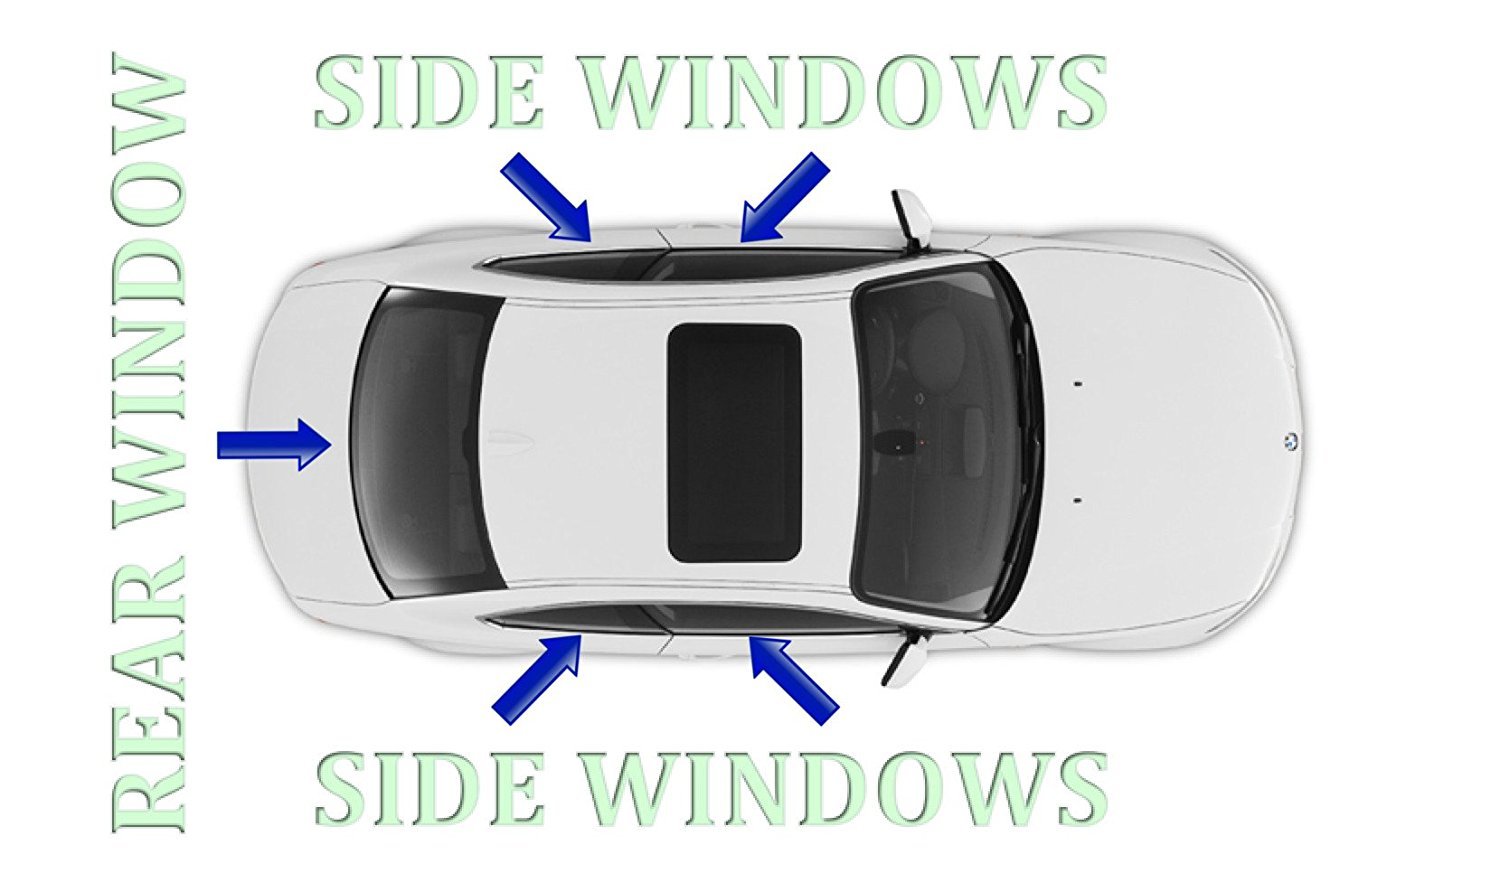 Autotech Park Precut Window Tinting Film for 2013-2017 Honda Accord Sedan